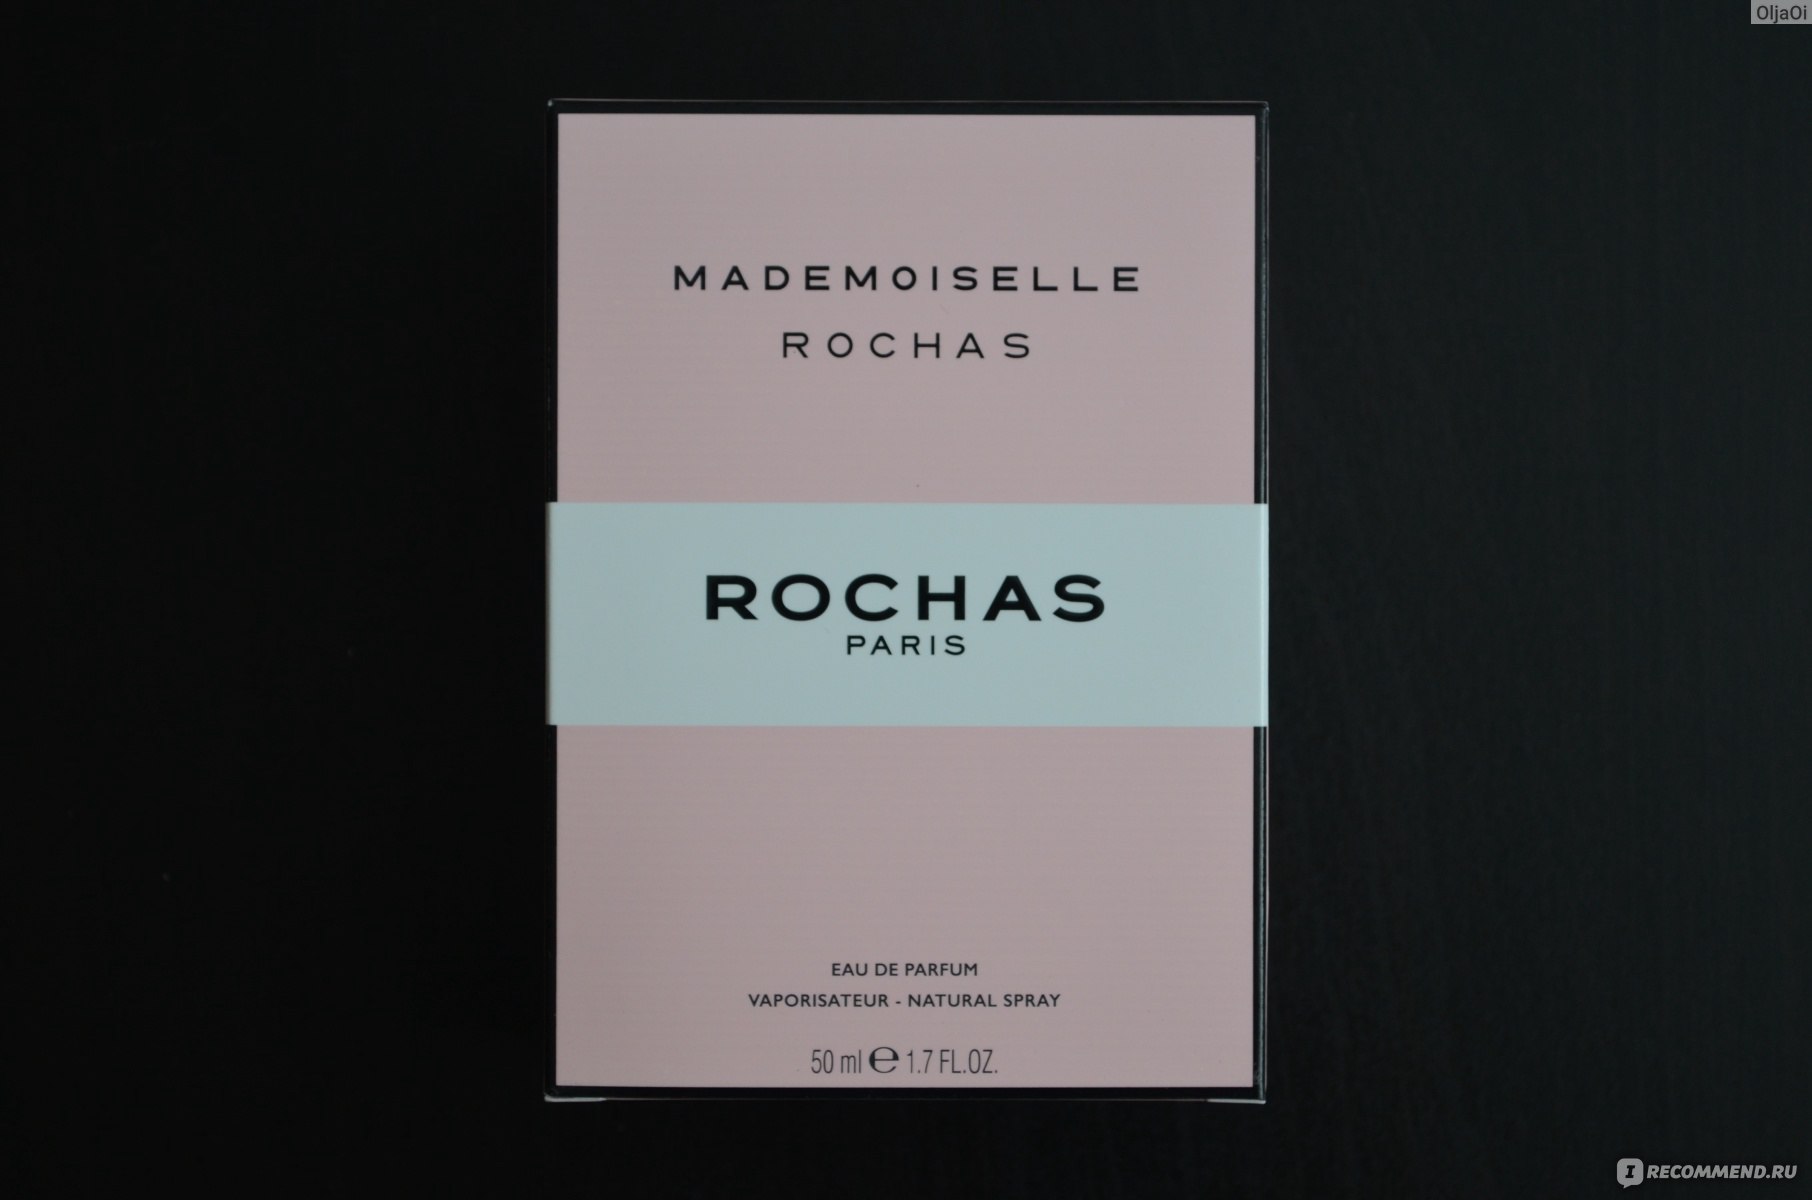 Rochas mademoiselle rochas отзывы. Мадмуазель рошас отзывы. Rochas бренд одежды. Рошас мадемуазель в коробке. Аромат рошас женский отзывы.